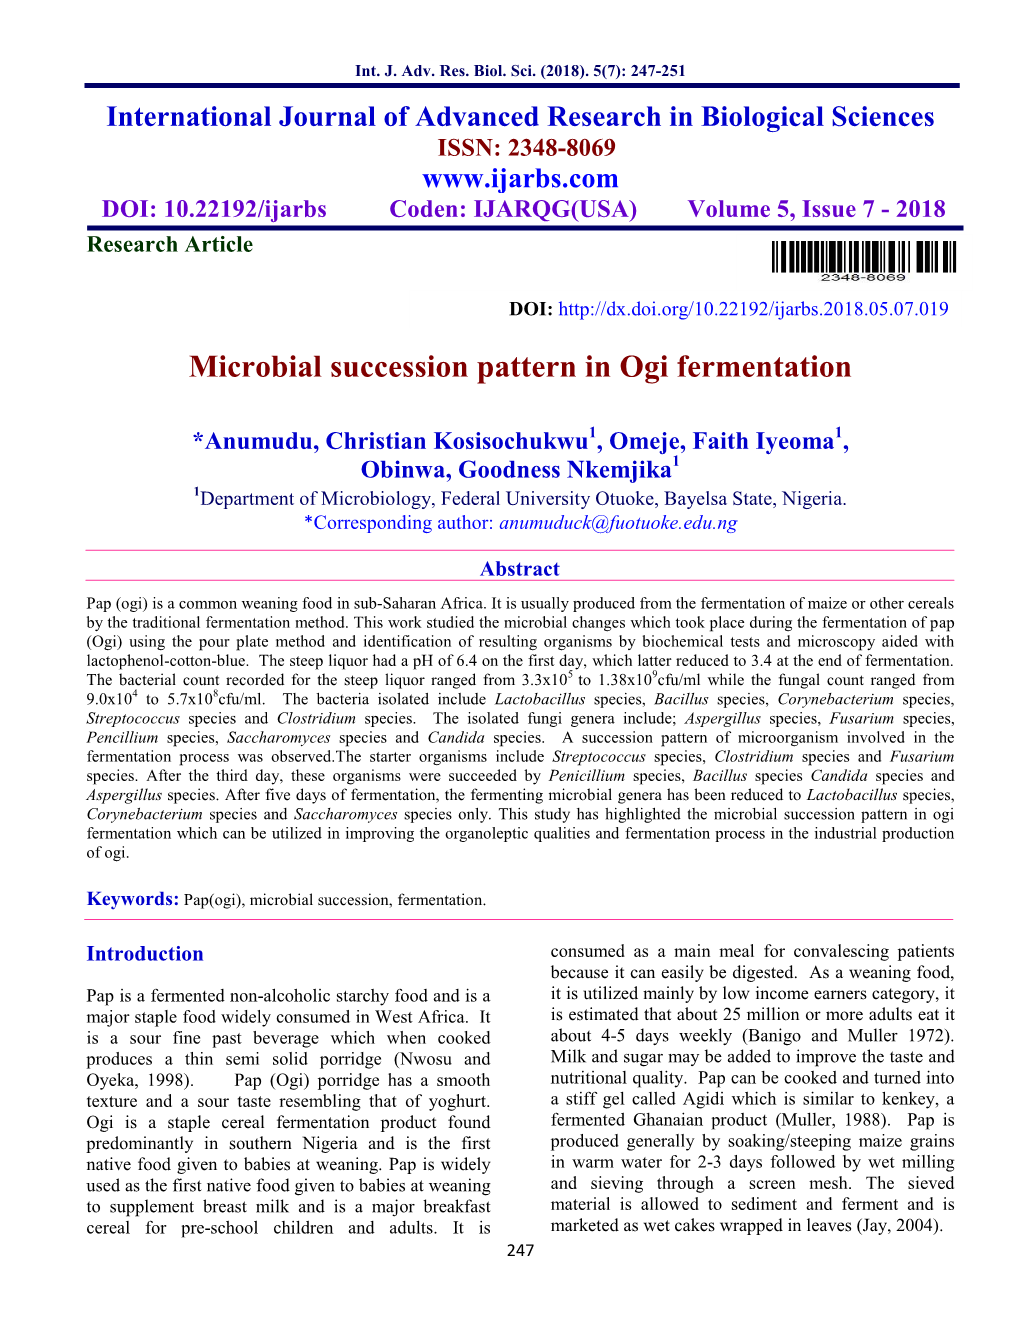 Microbial Succession Pattern in Ogi Fermentation